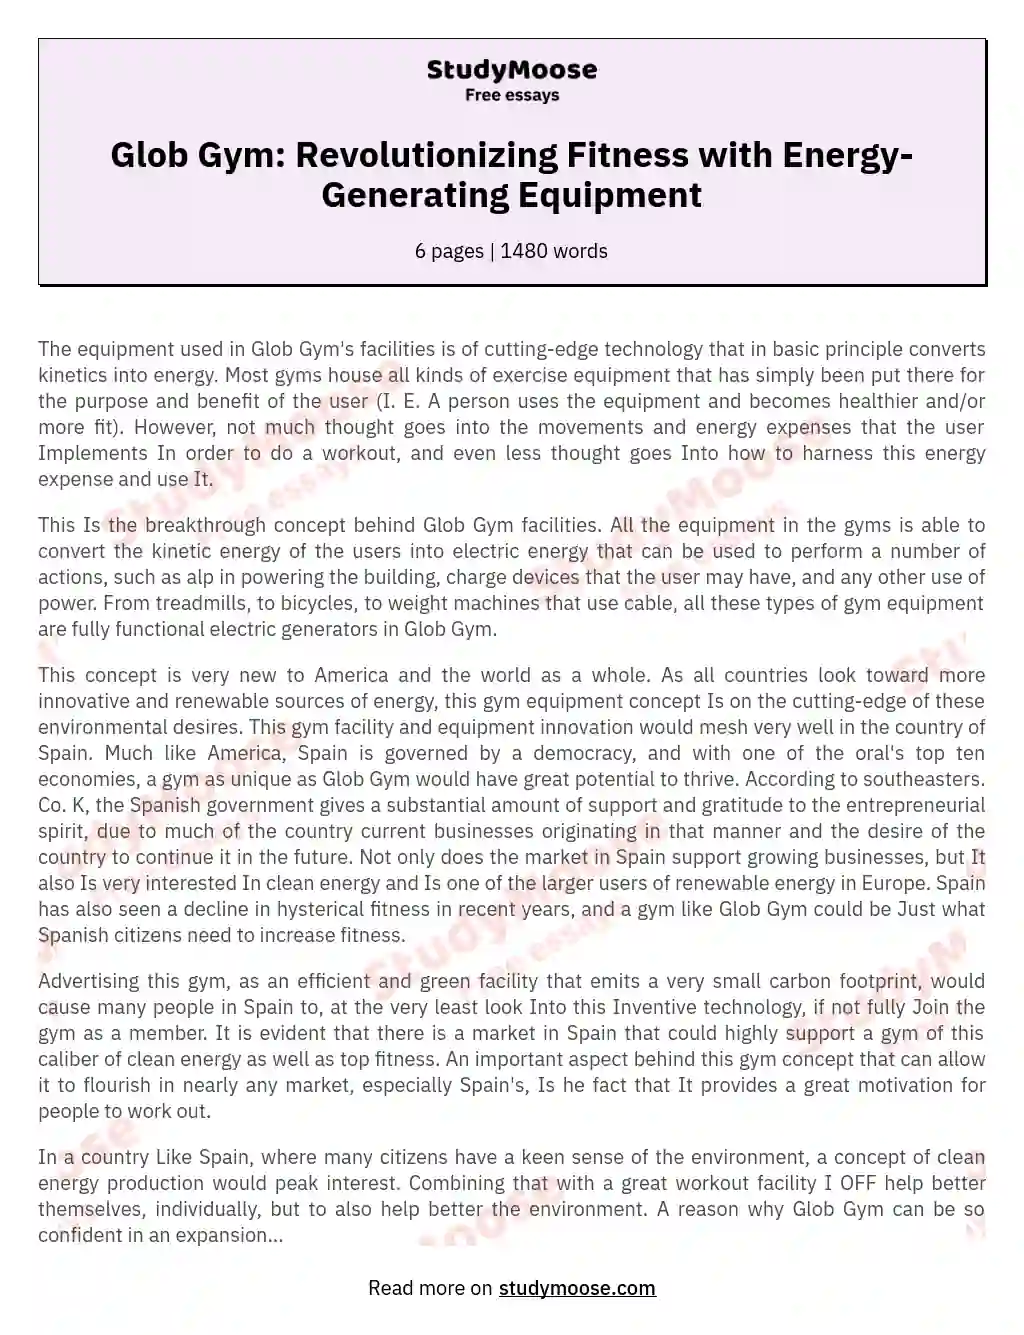 Glob Gym: Revolutionizing Fitness with Energy-Generating Equipment essay